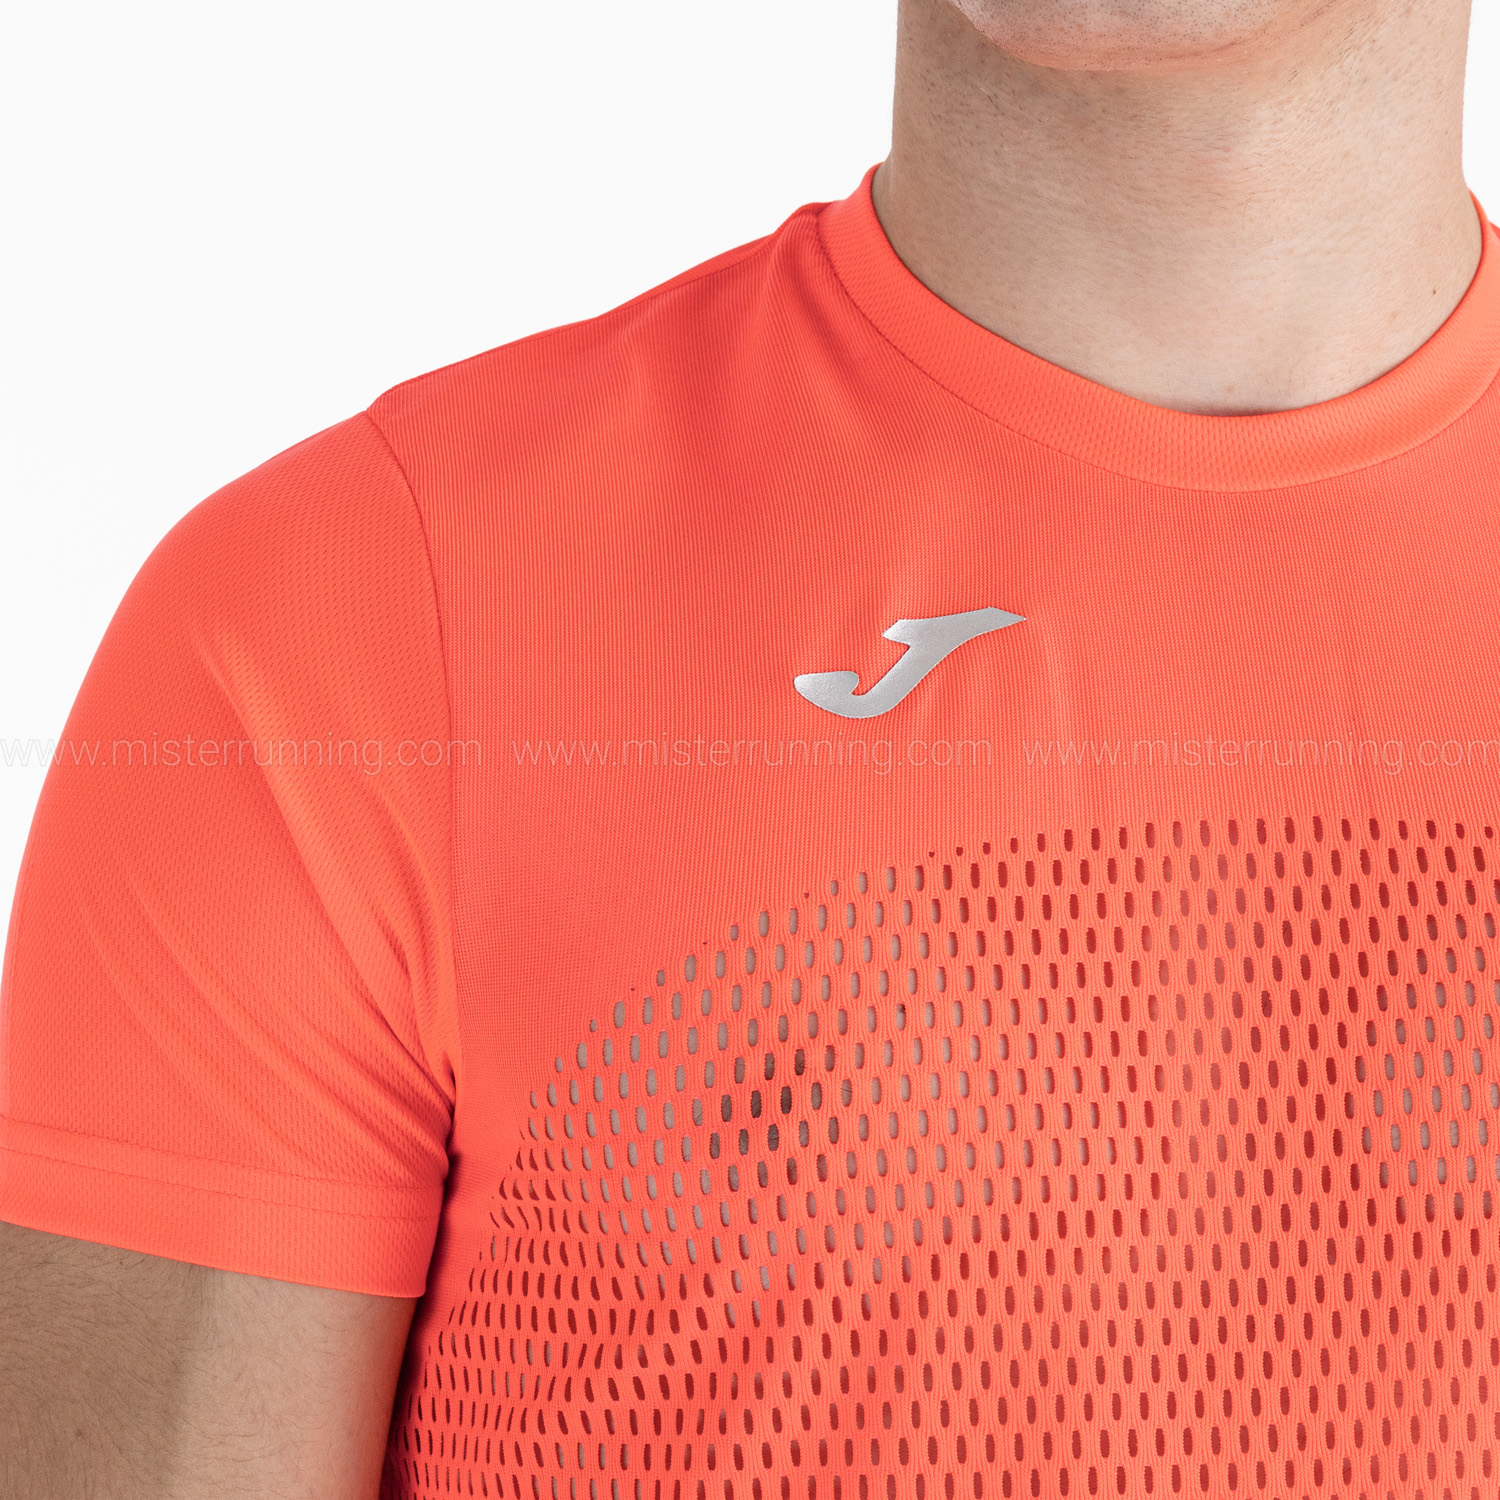 Joma Marathon Camiseta - Fluor Orange